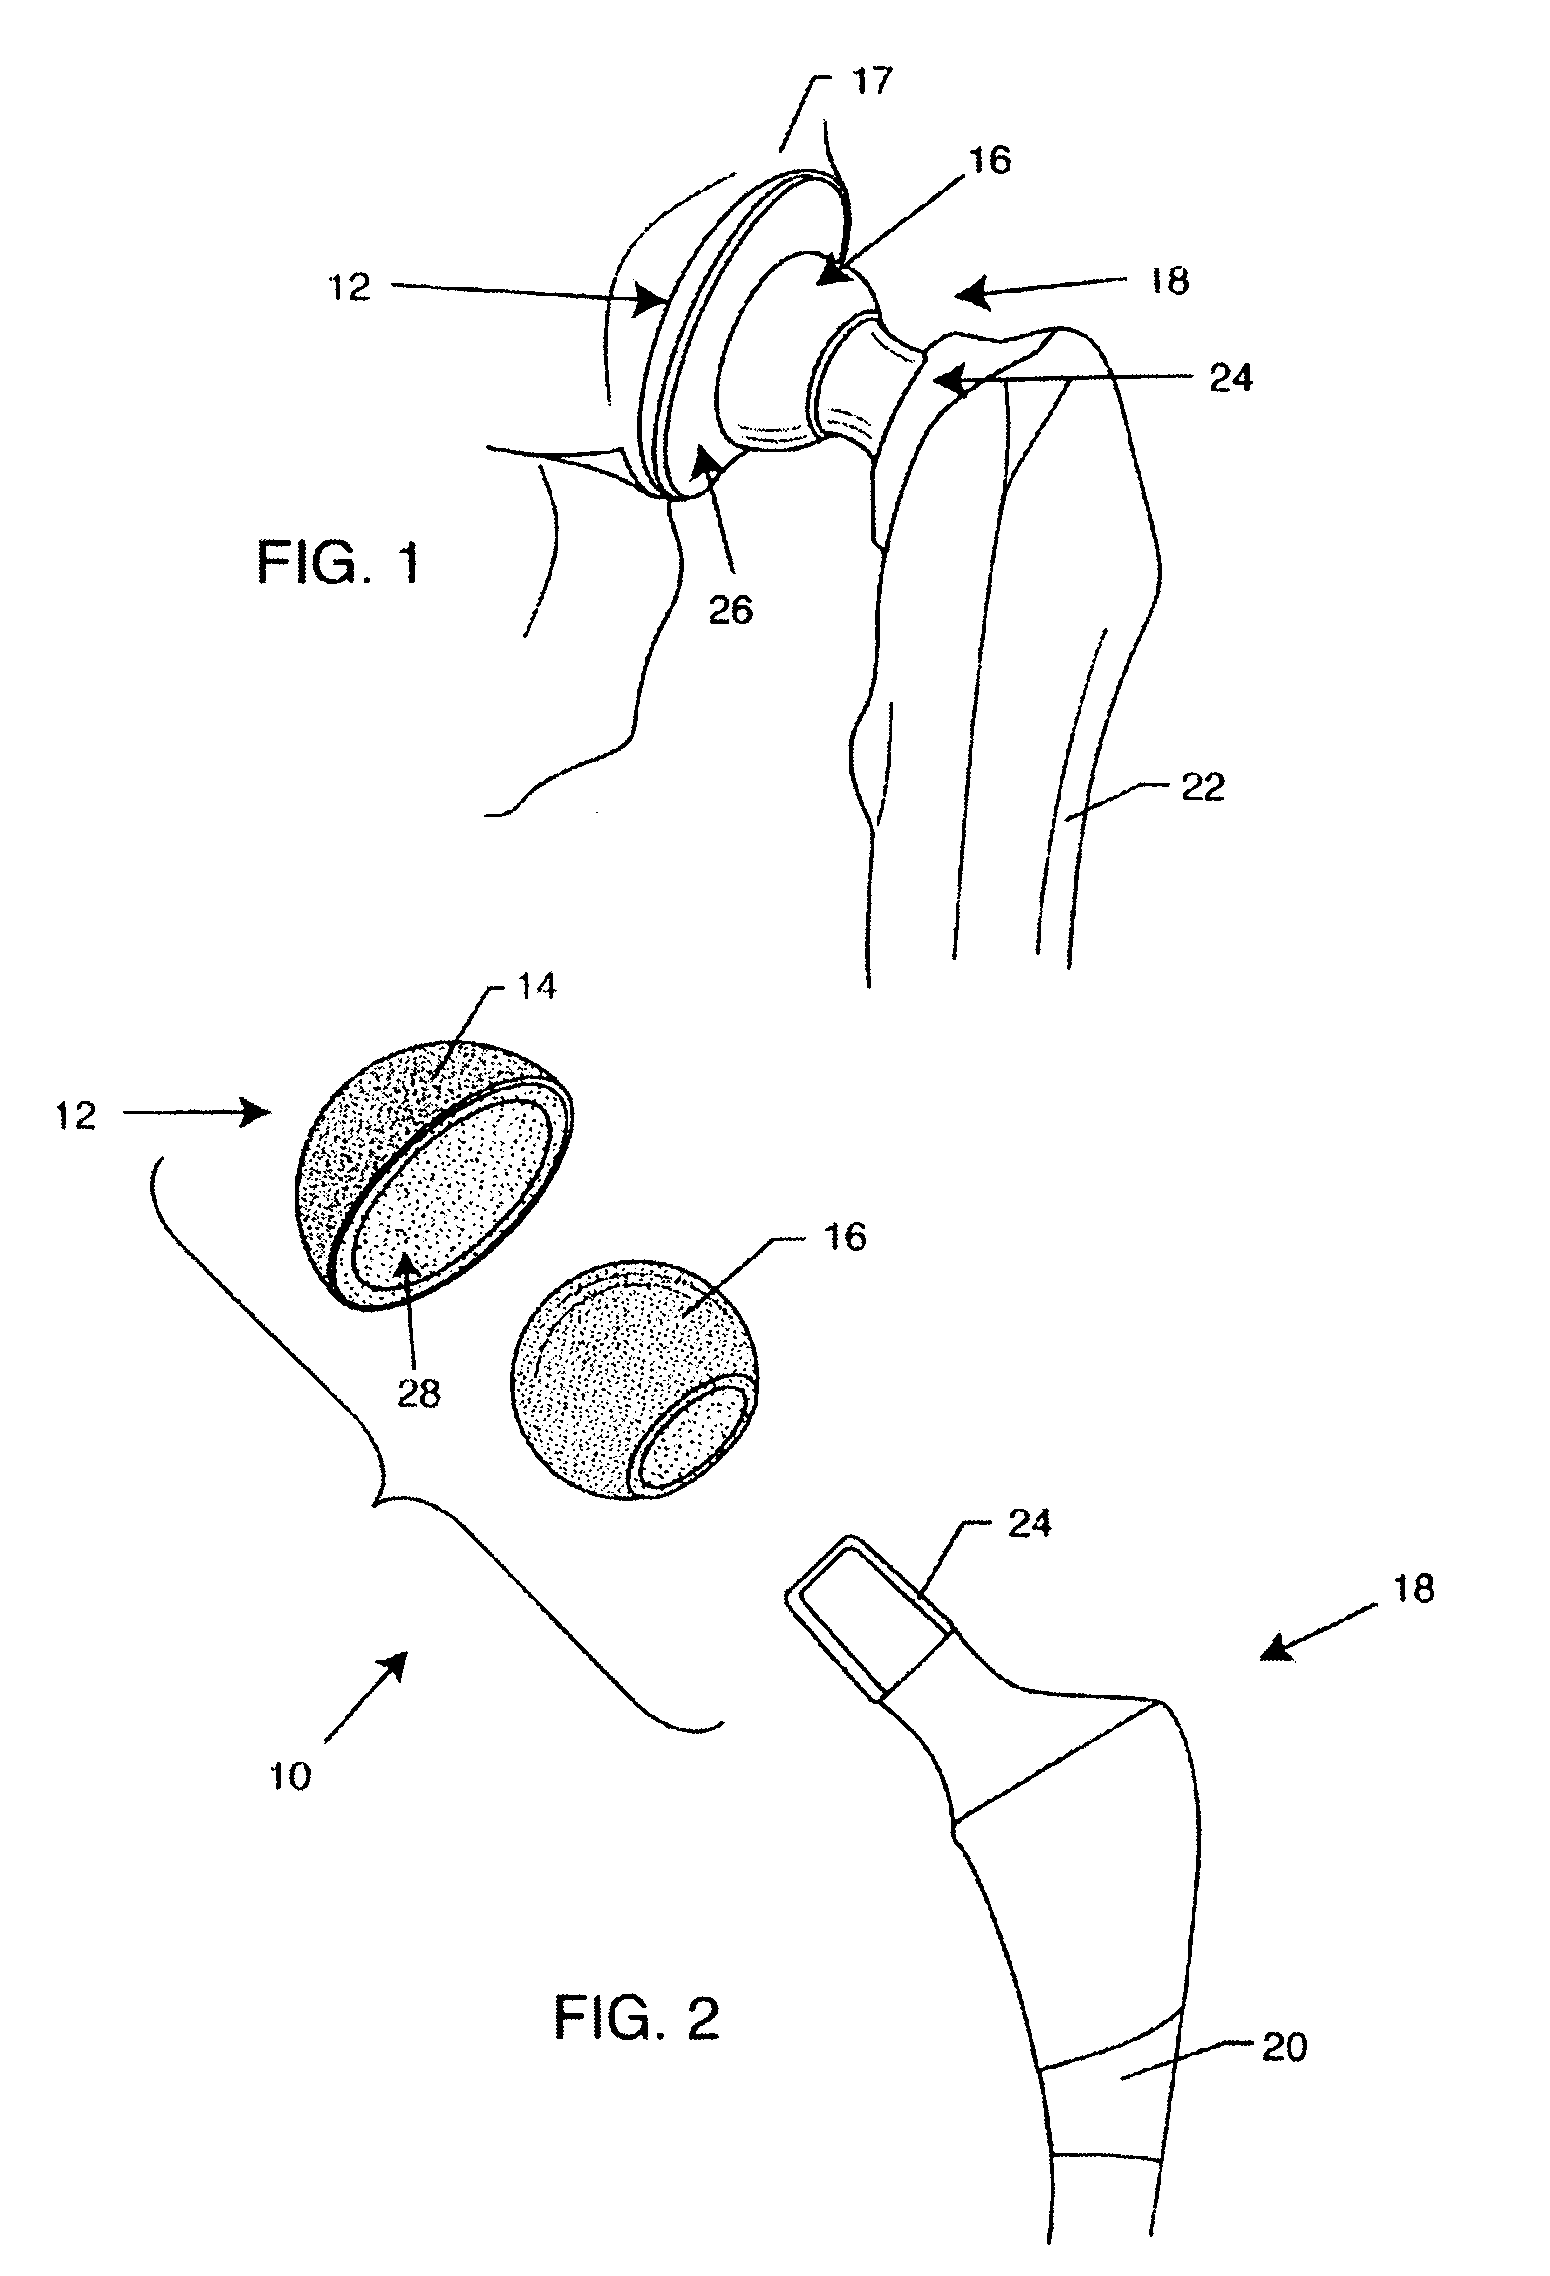 Hip prosthesis with monoblock ceramic acetabular cup